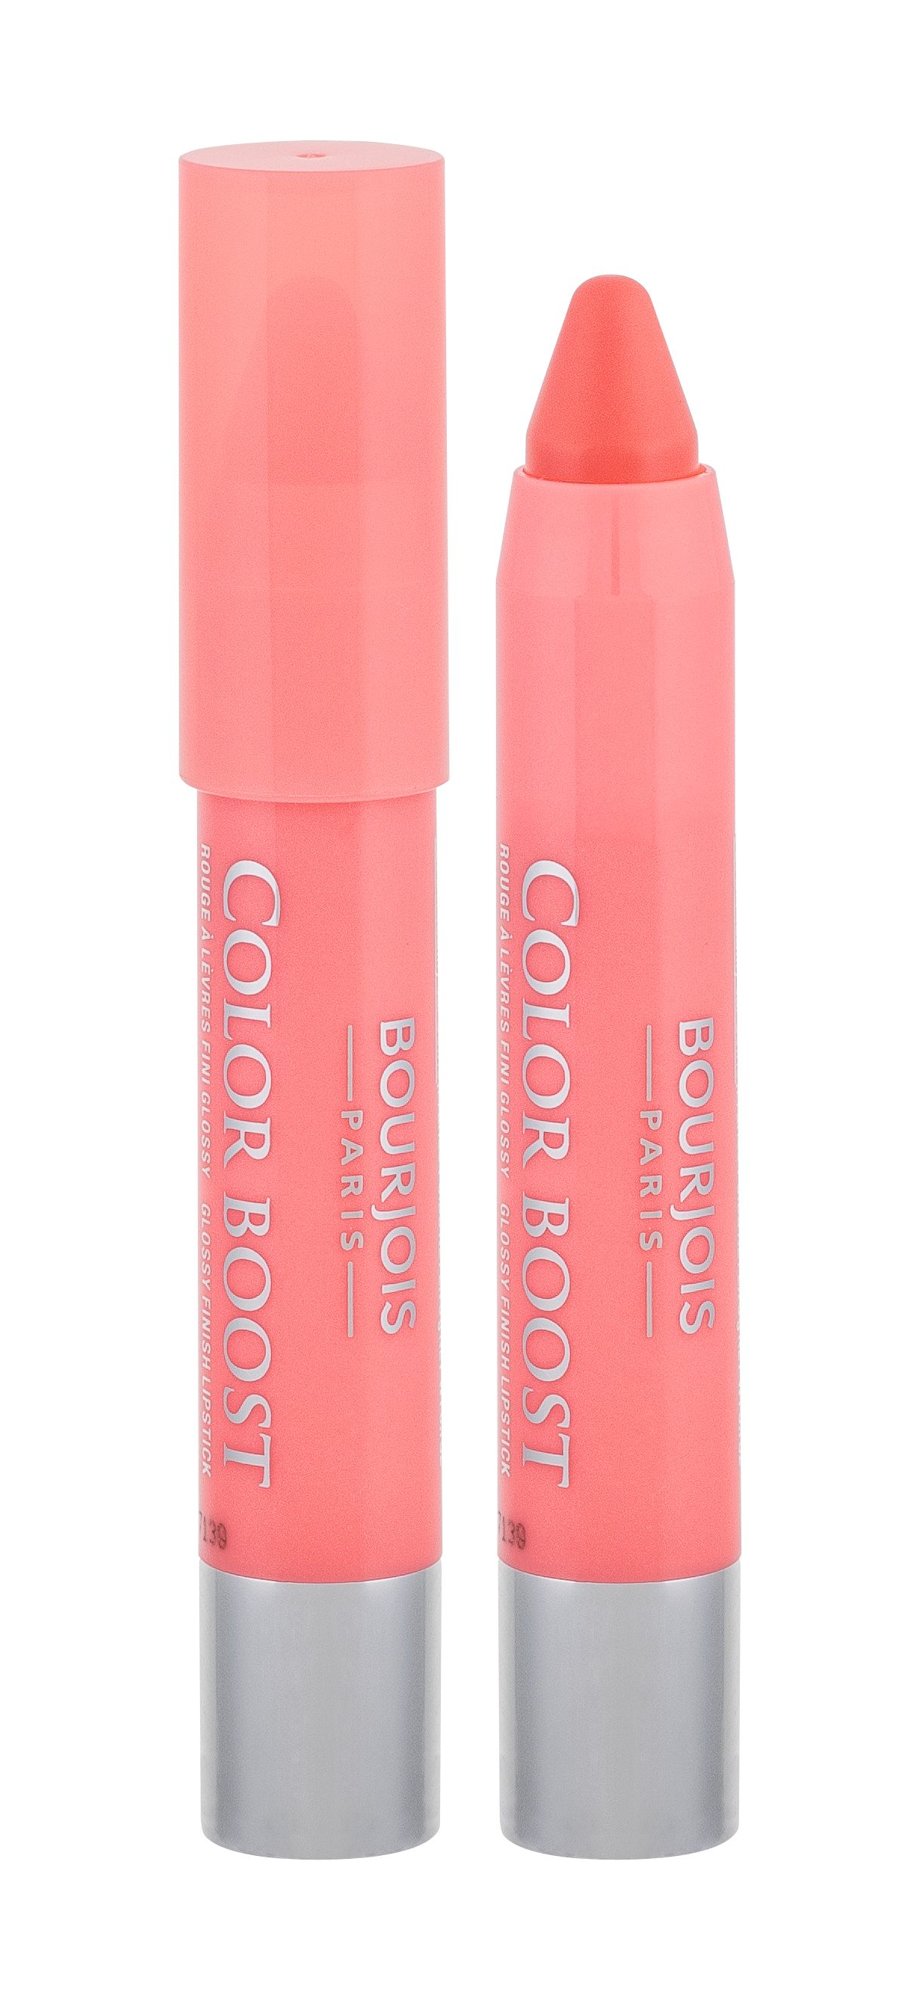 BOURJOIS Paris Color Boost Lipstick SPF15